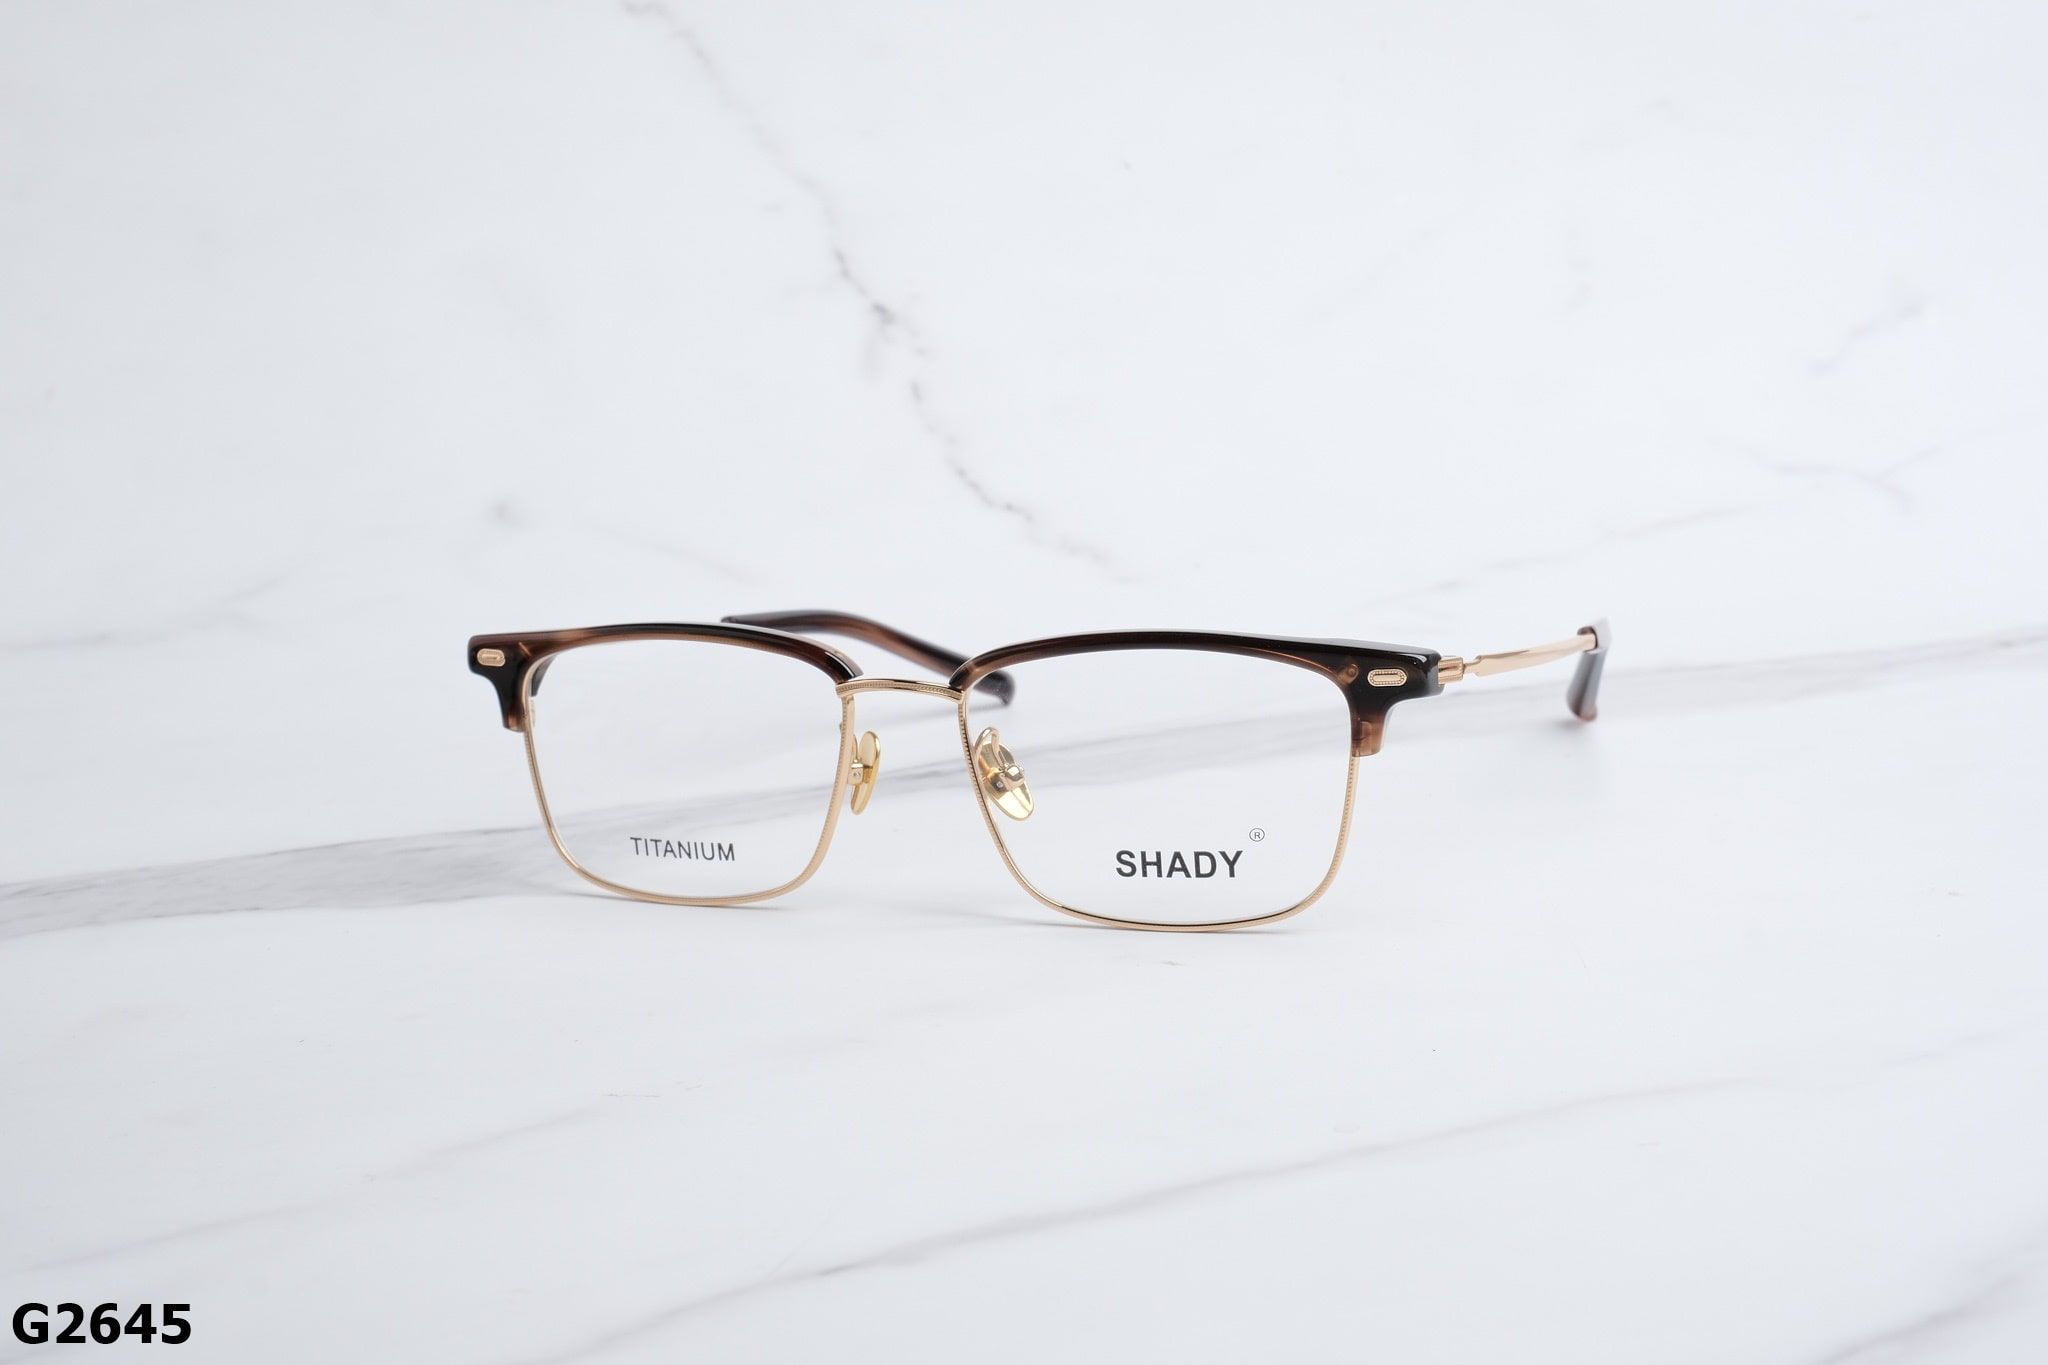  SHADY Eyewear - Glasses - G2645 